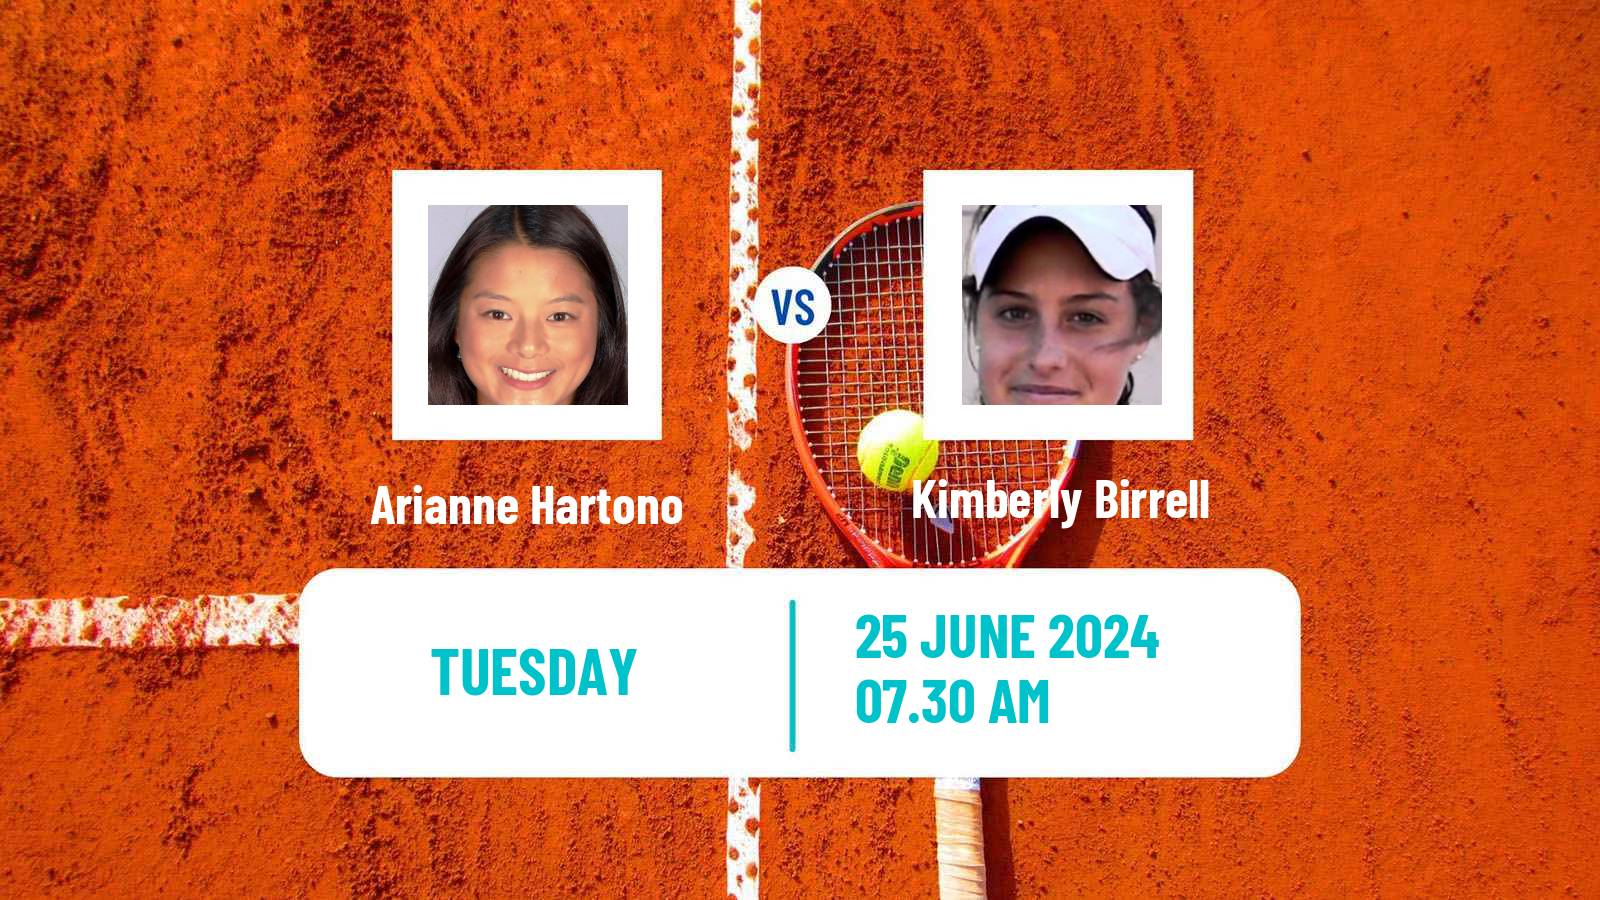 Tennis WTA Wimbledon Arianne Hartono - Kimberly Birrell